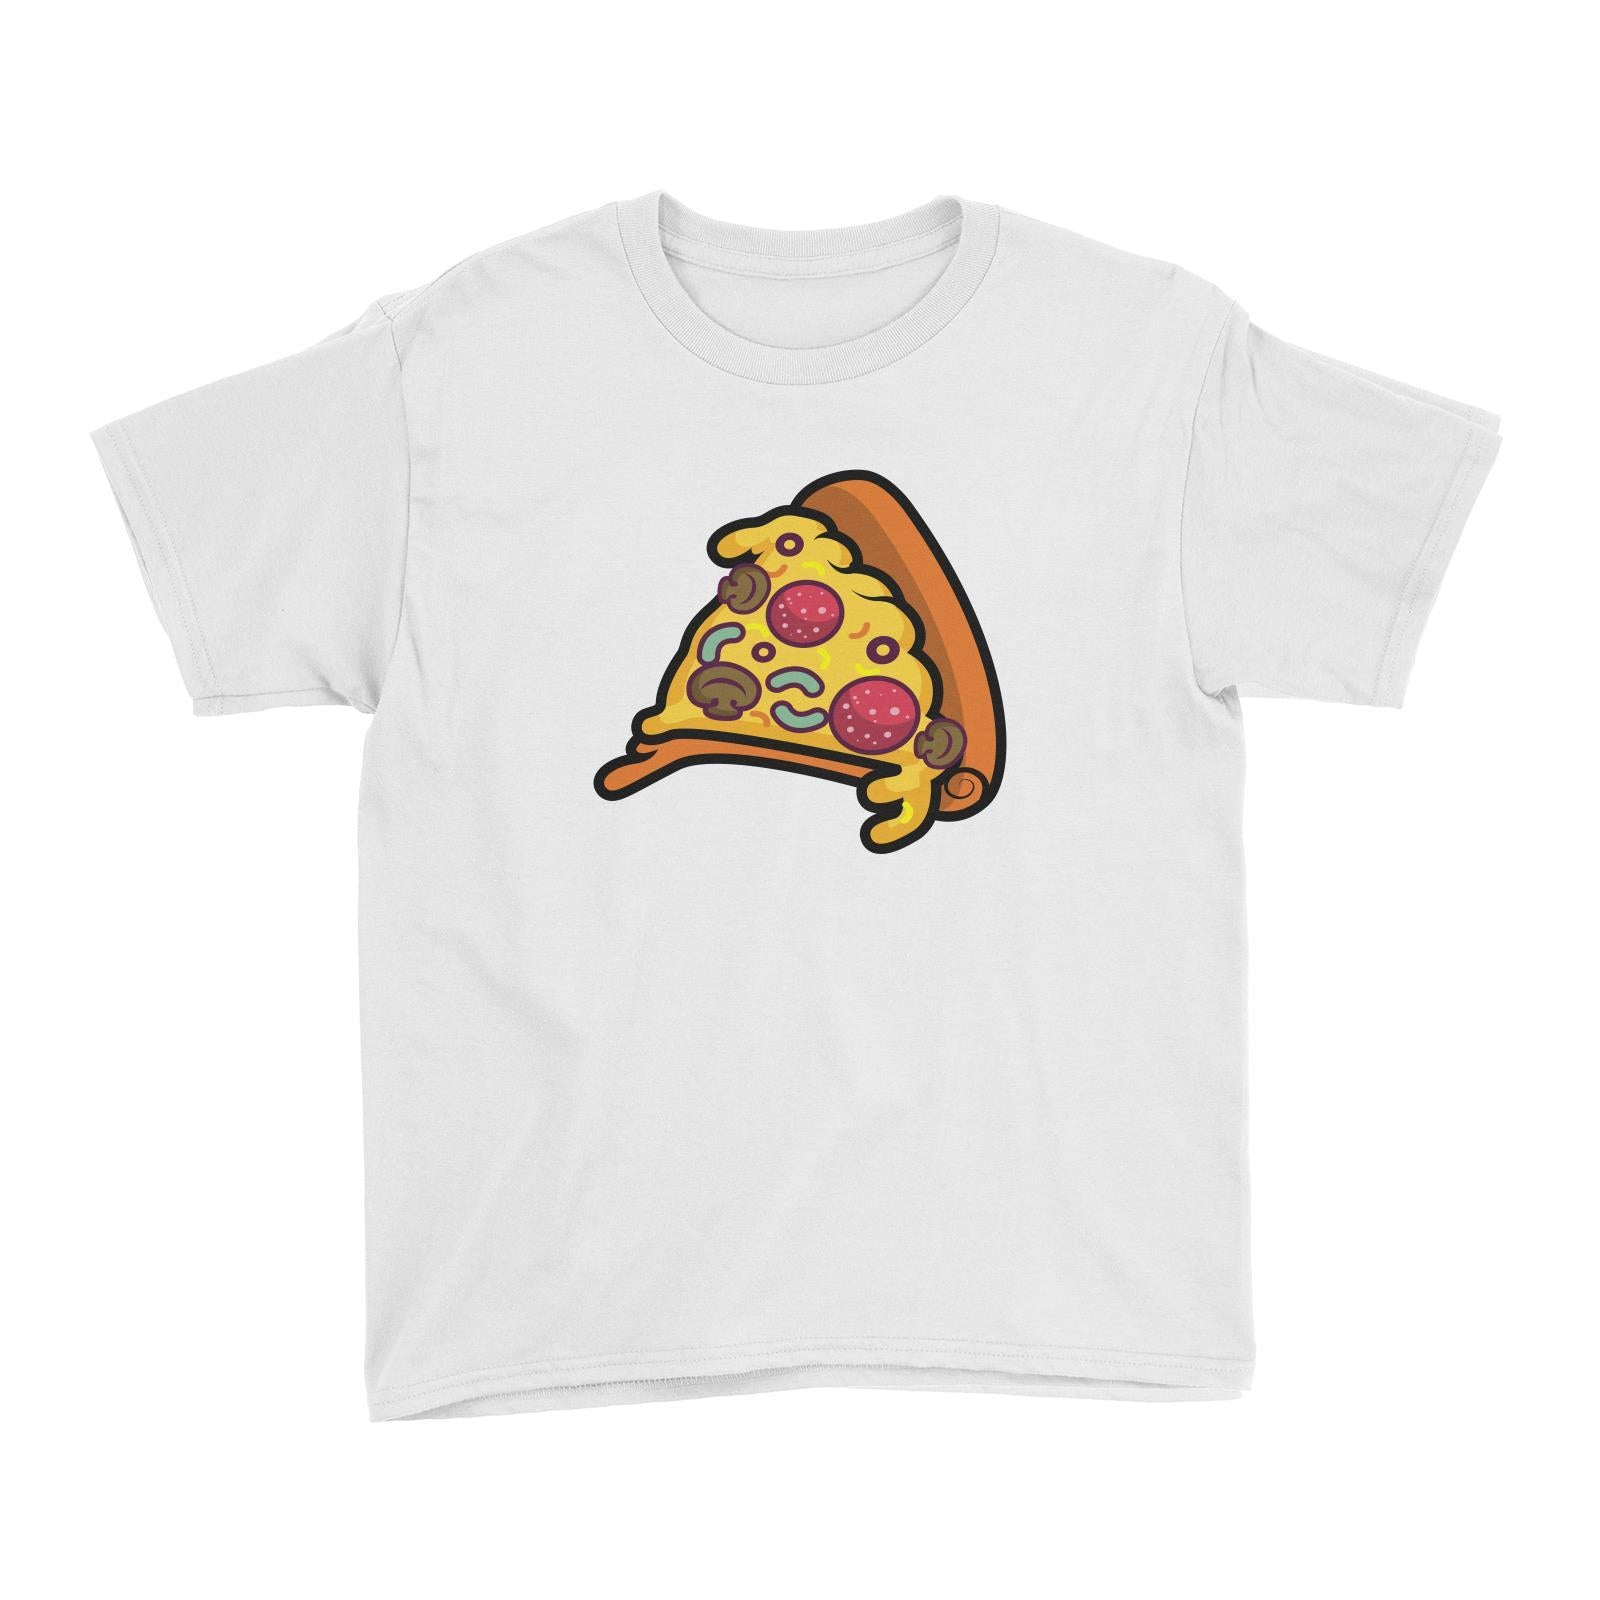 Fast Food Pizza Slice Kid's T-Shirt  Matching Family Comic Cartoon